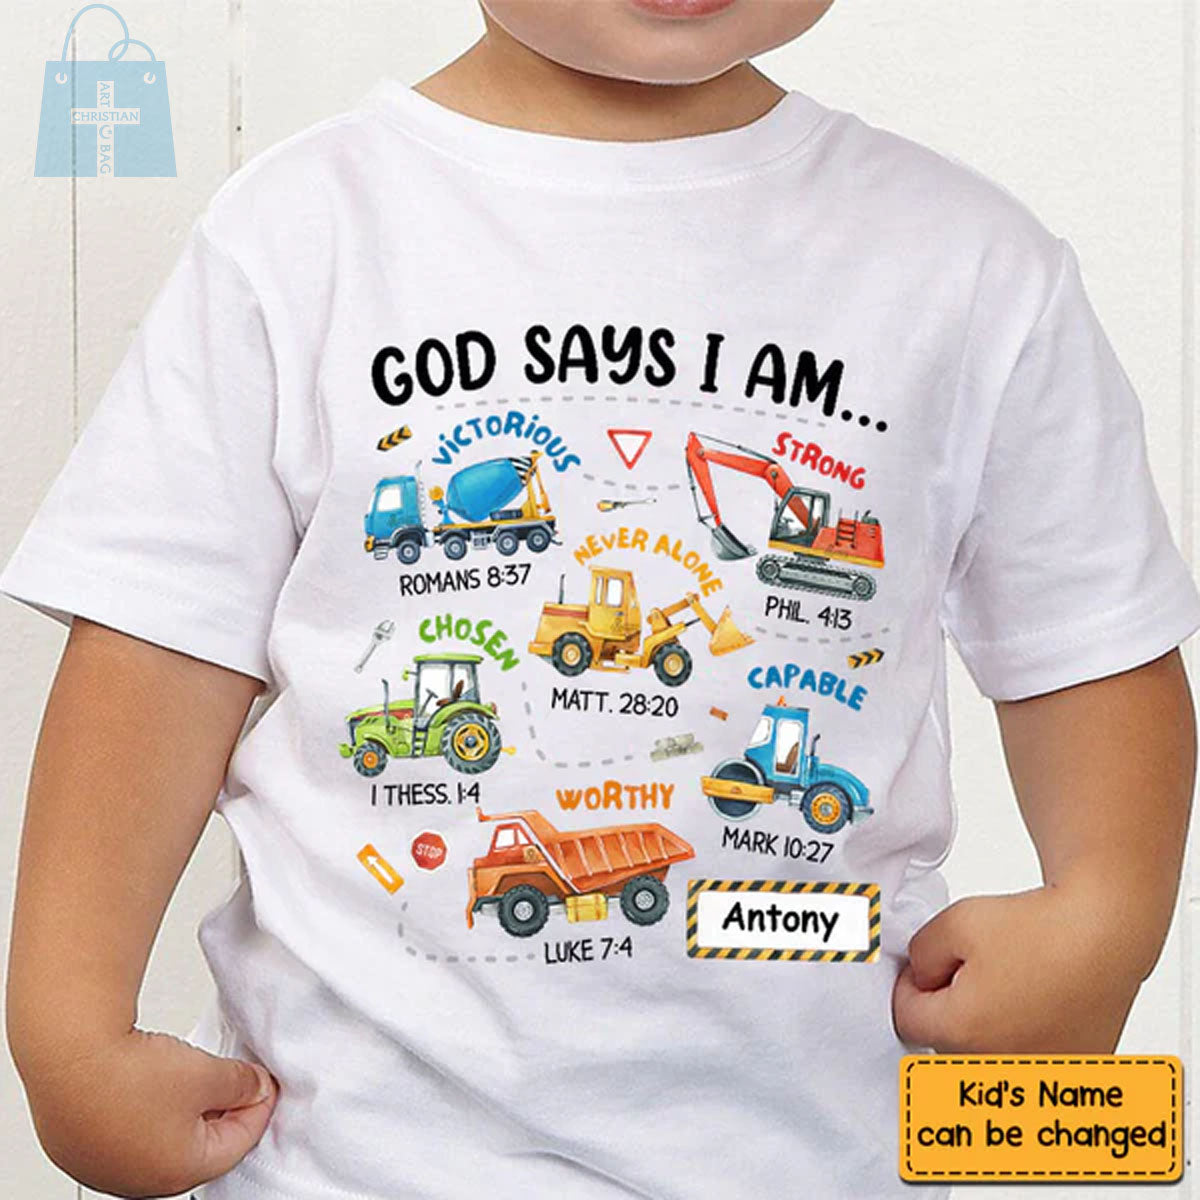 Christianartbag T-shirt, Construction Machines God Say I Am Kid T-Shirt, Children's Printed T-Shirts, CABTK02090923. - Christian Art Bag